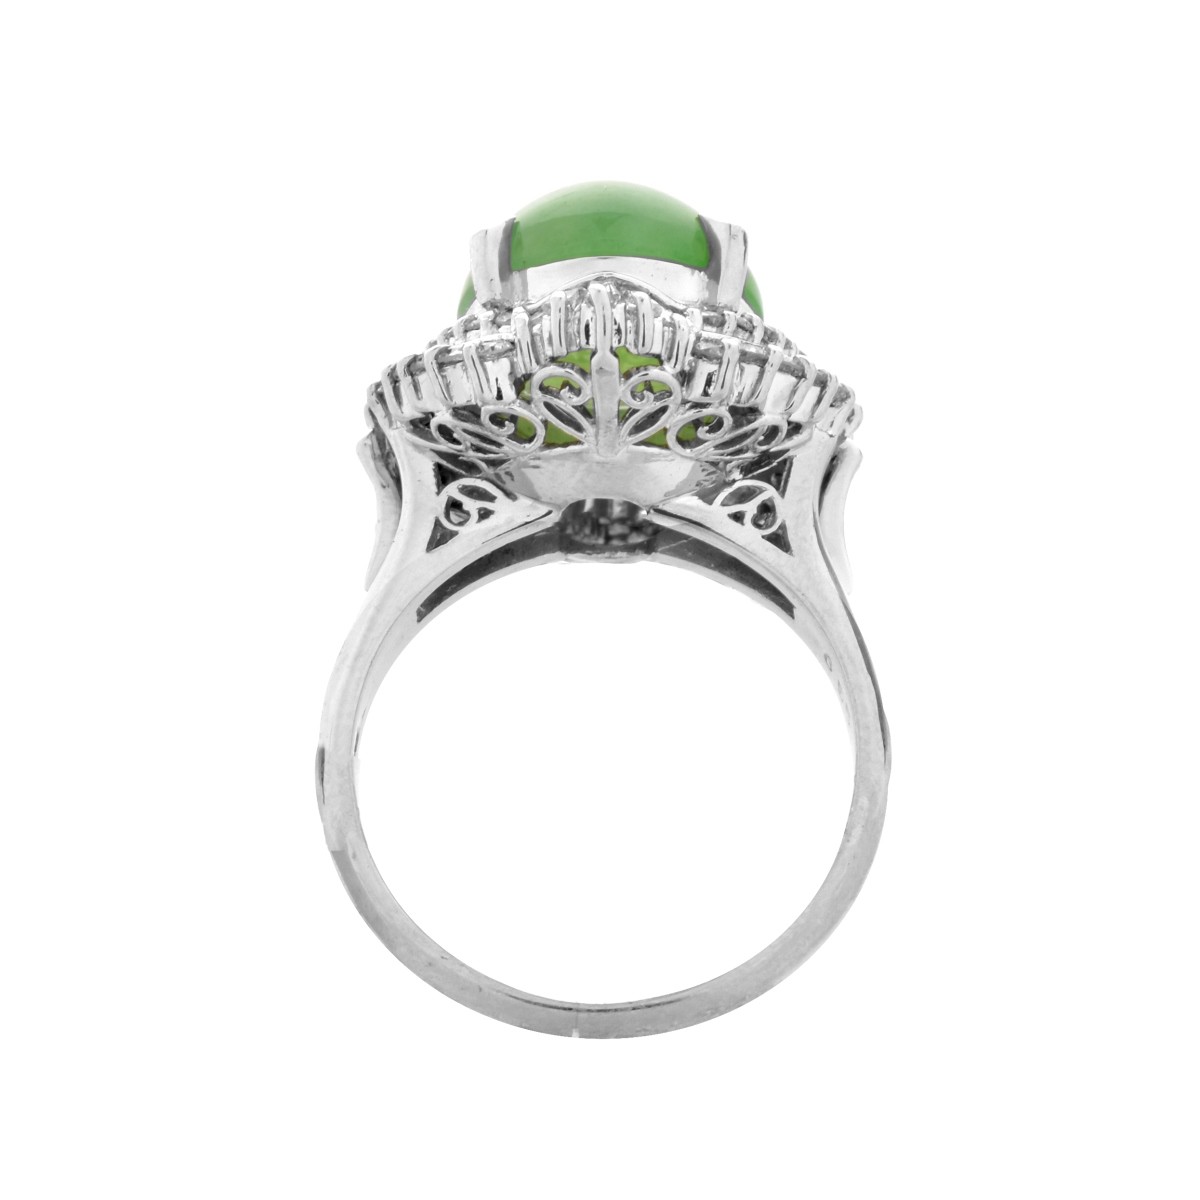 Jade, Diamond and Platinum Ring